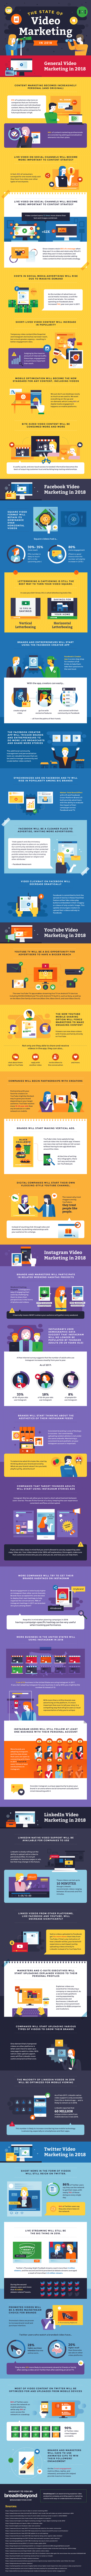 video marketing infographic-min (1)